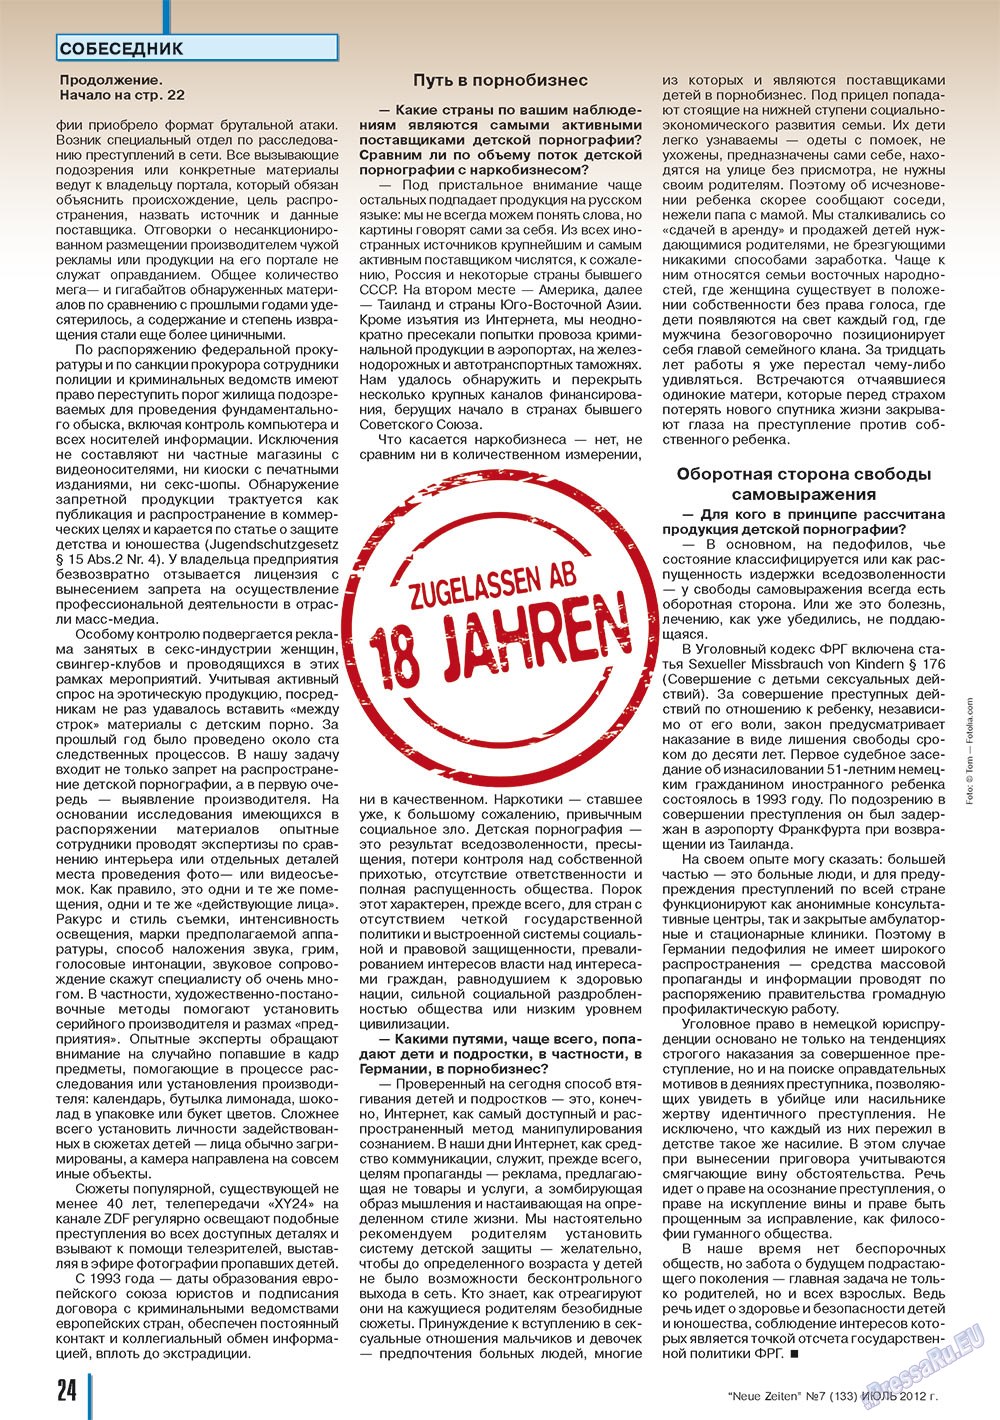 Neue Zeiten (журнал). 2012 год, номер 7, стр. 24